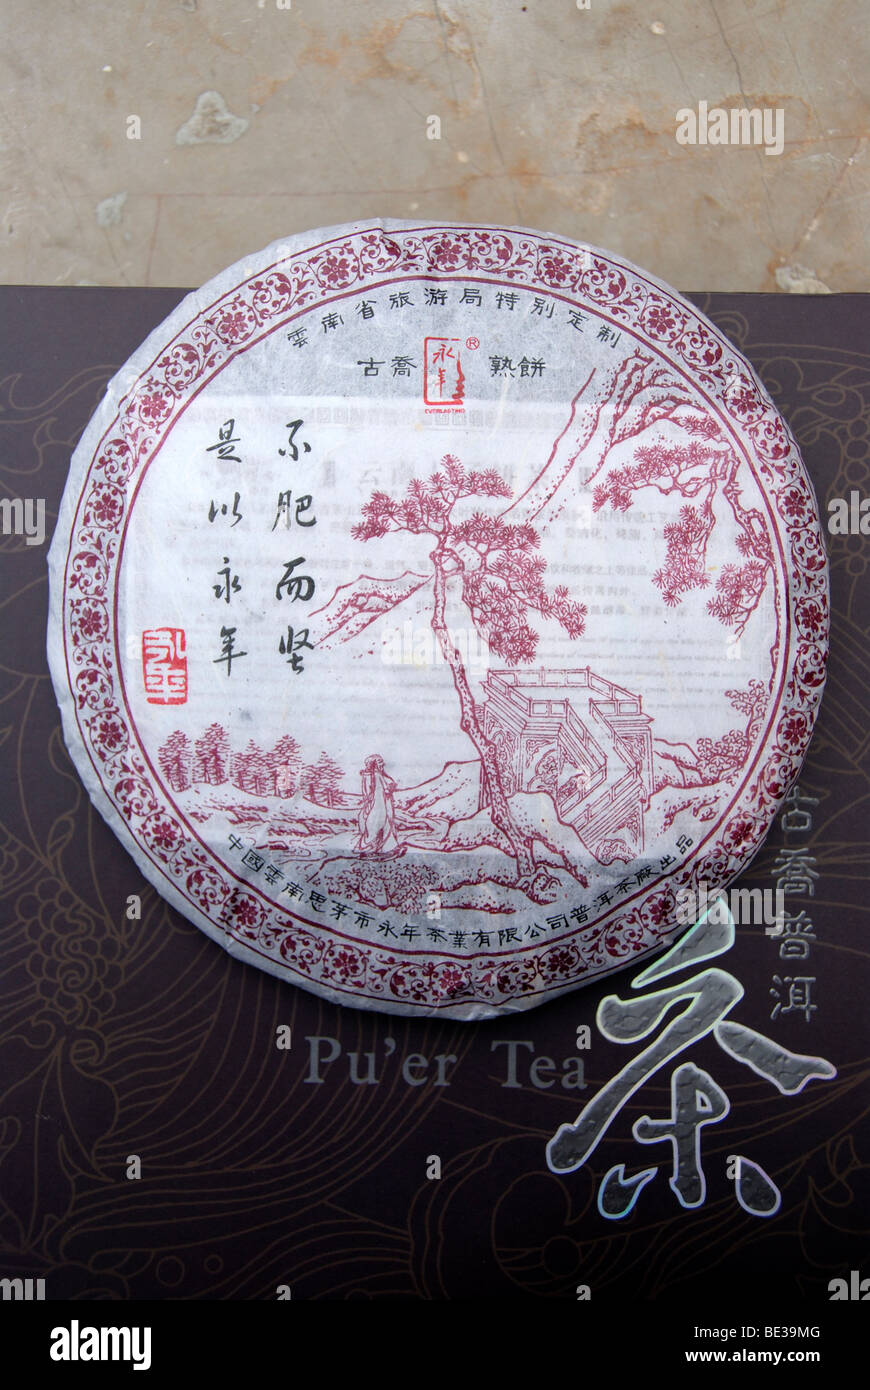 Ronda presentados atractivamente torta de té Pu-Erh Té Pu'er (Camellia sinensis), Kunming, Provincia de Yunnan, República Popular de Chi Foto de stock